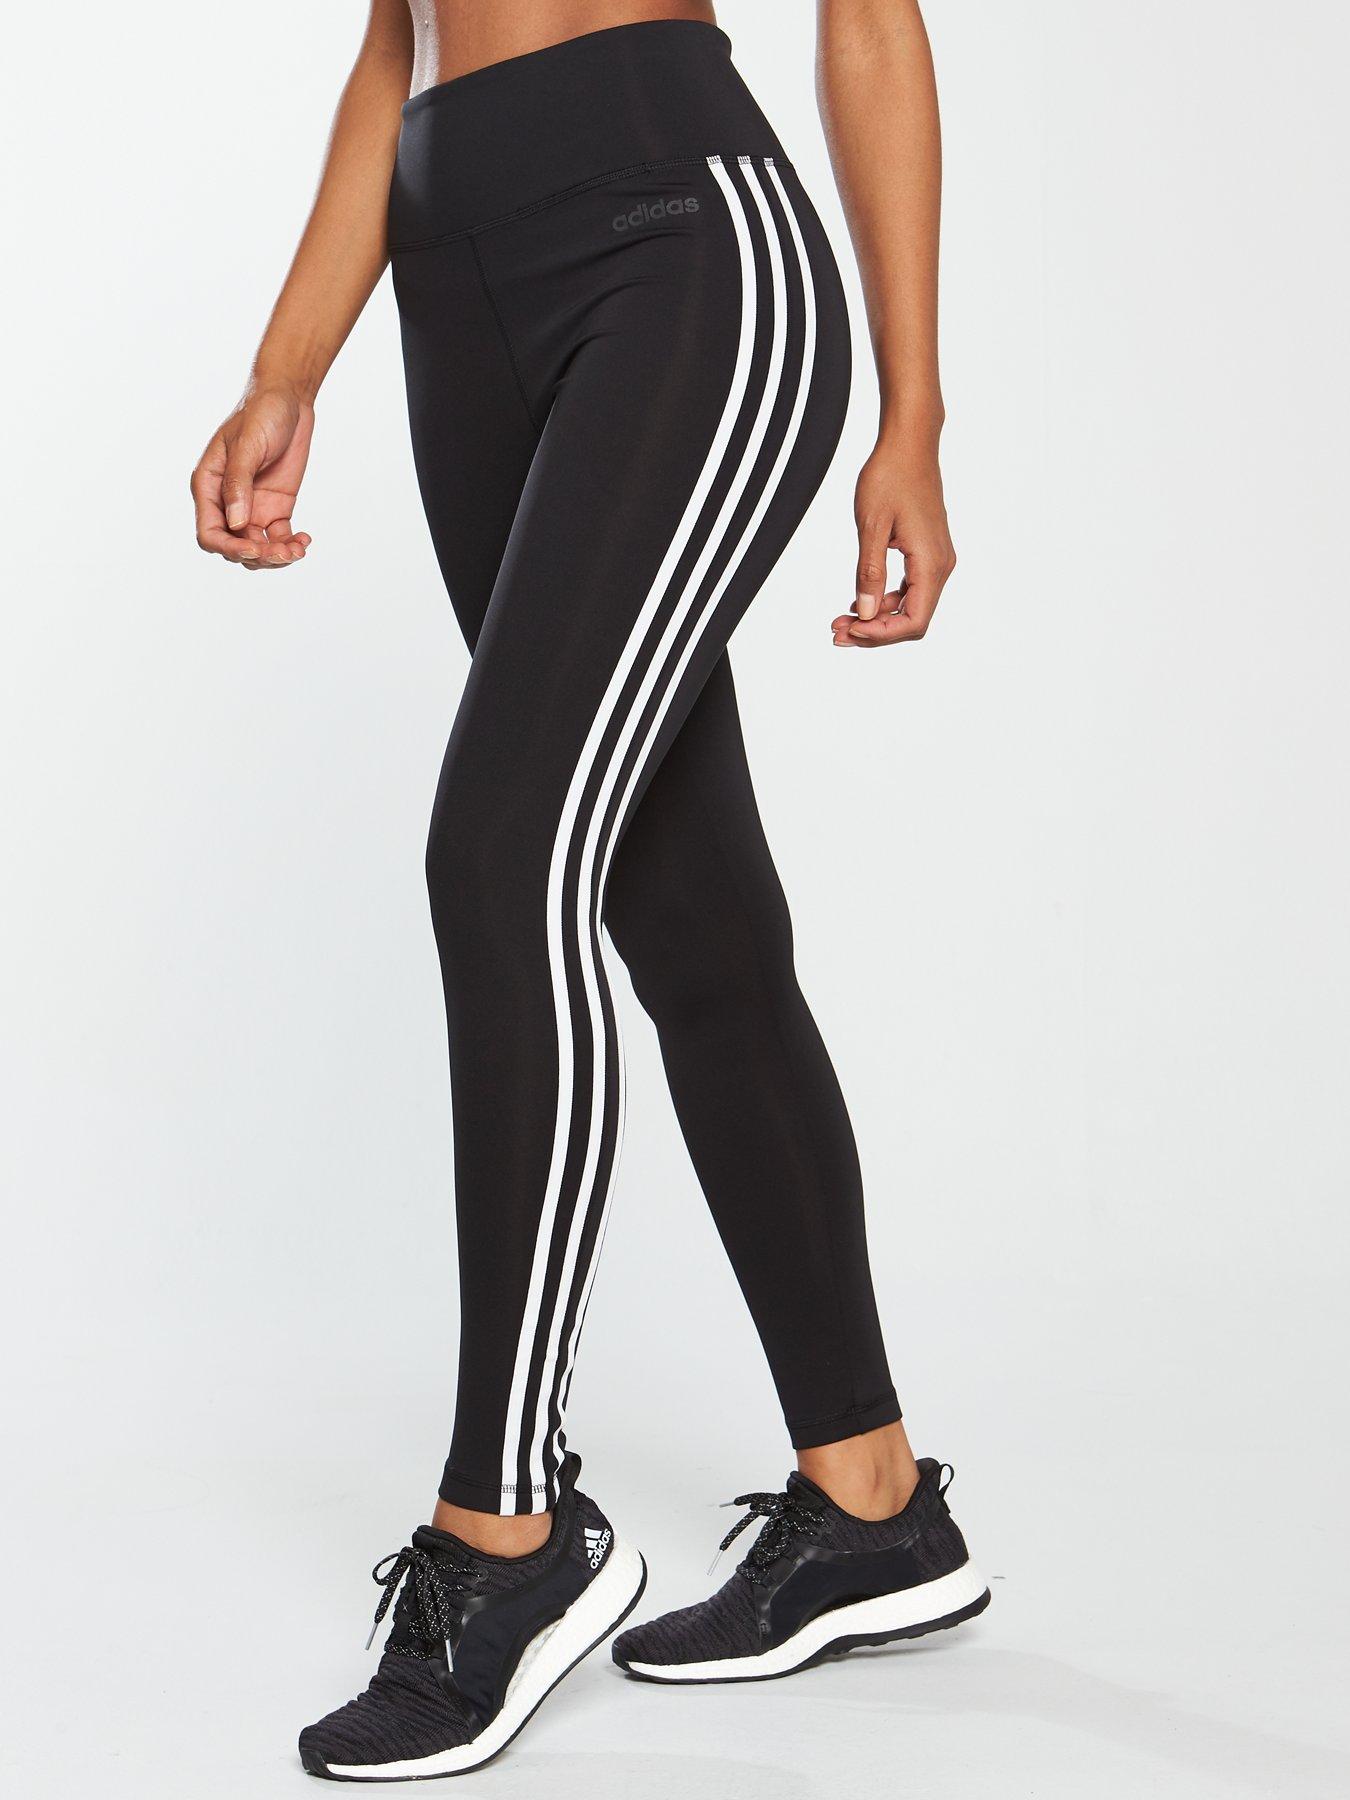 adidas two stripe leggings